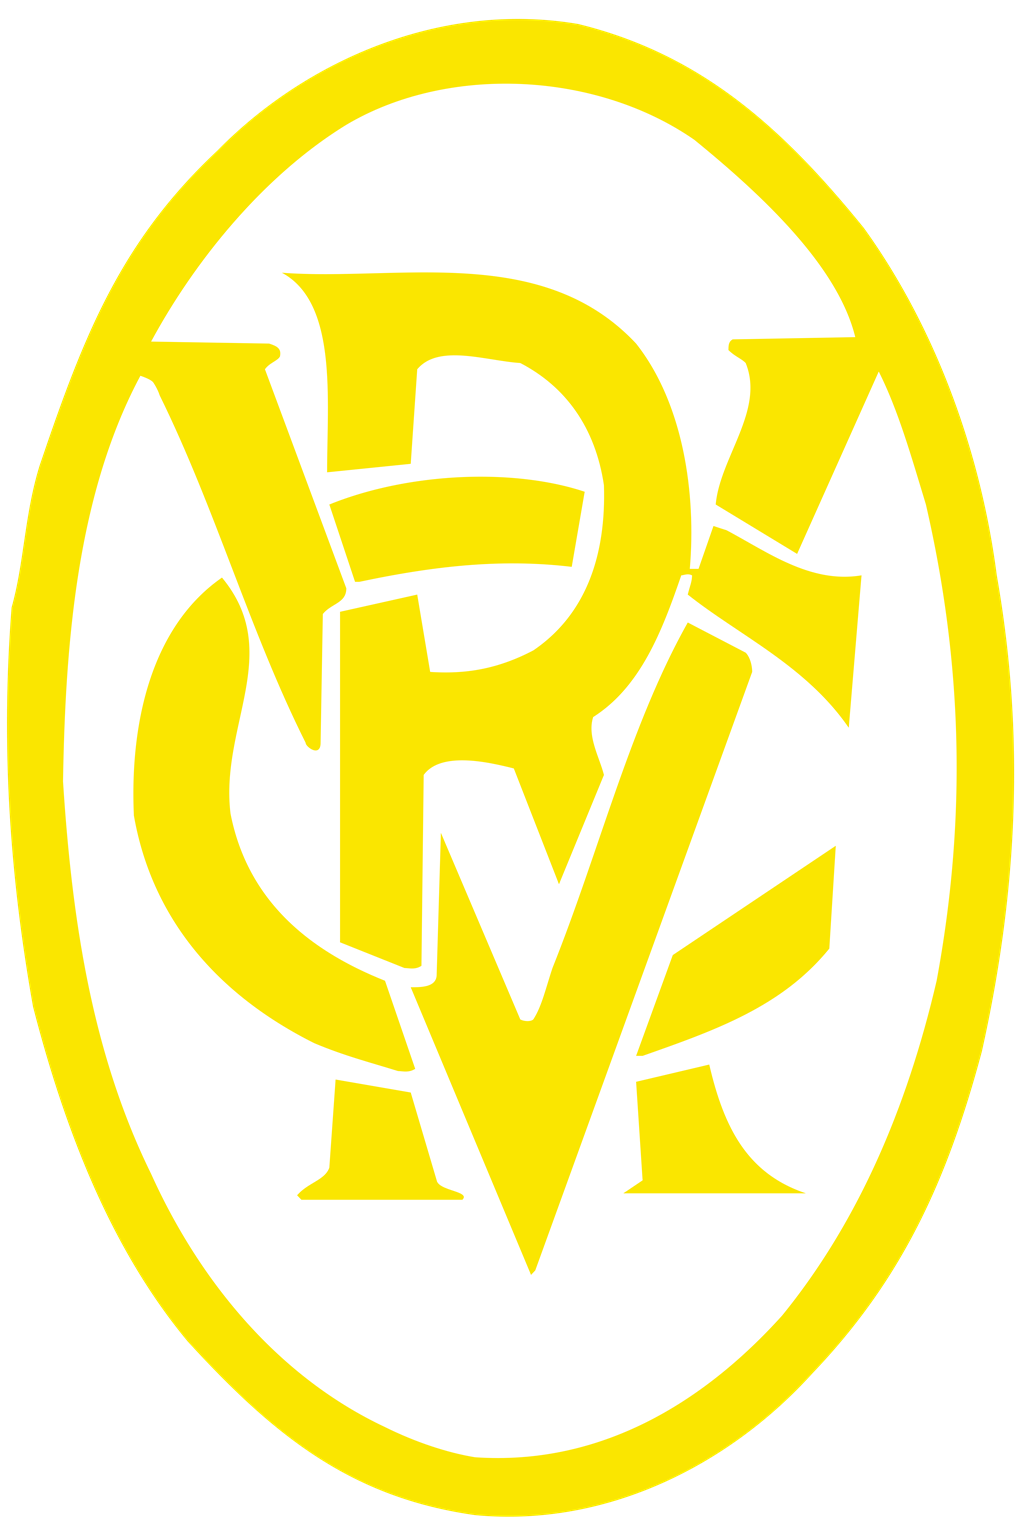 Victoria Racing Club logotype, transparent .png, medium, large